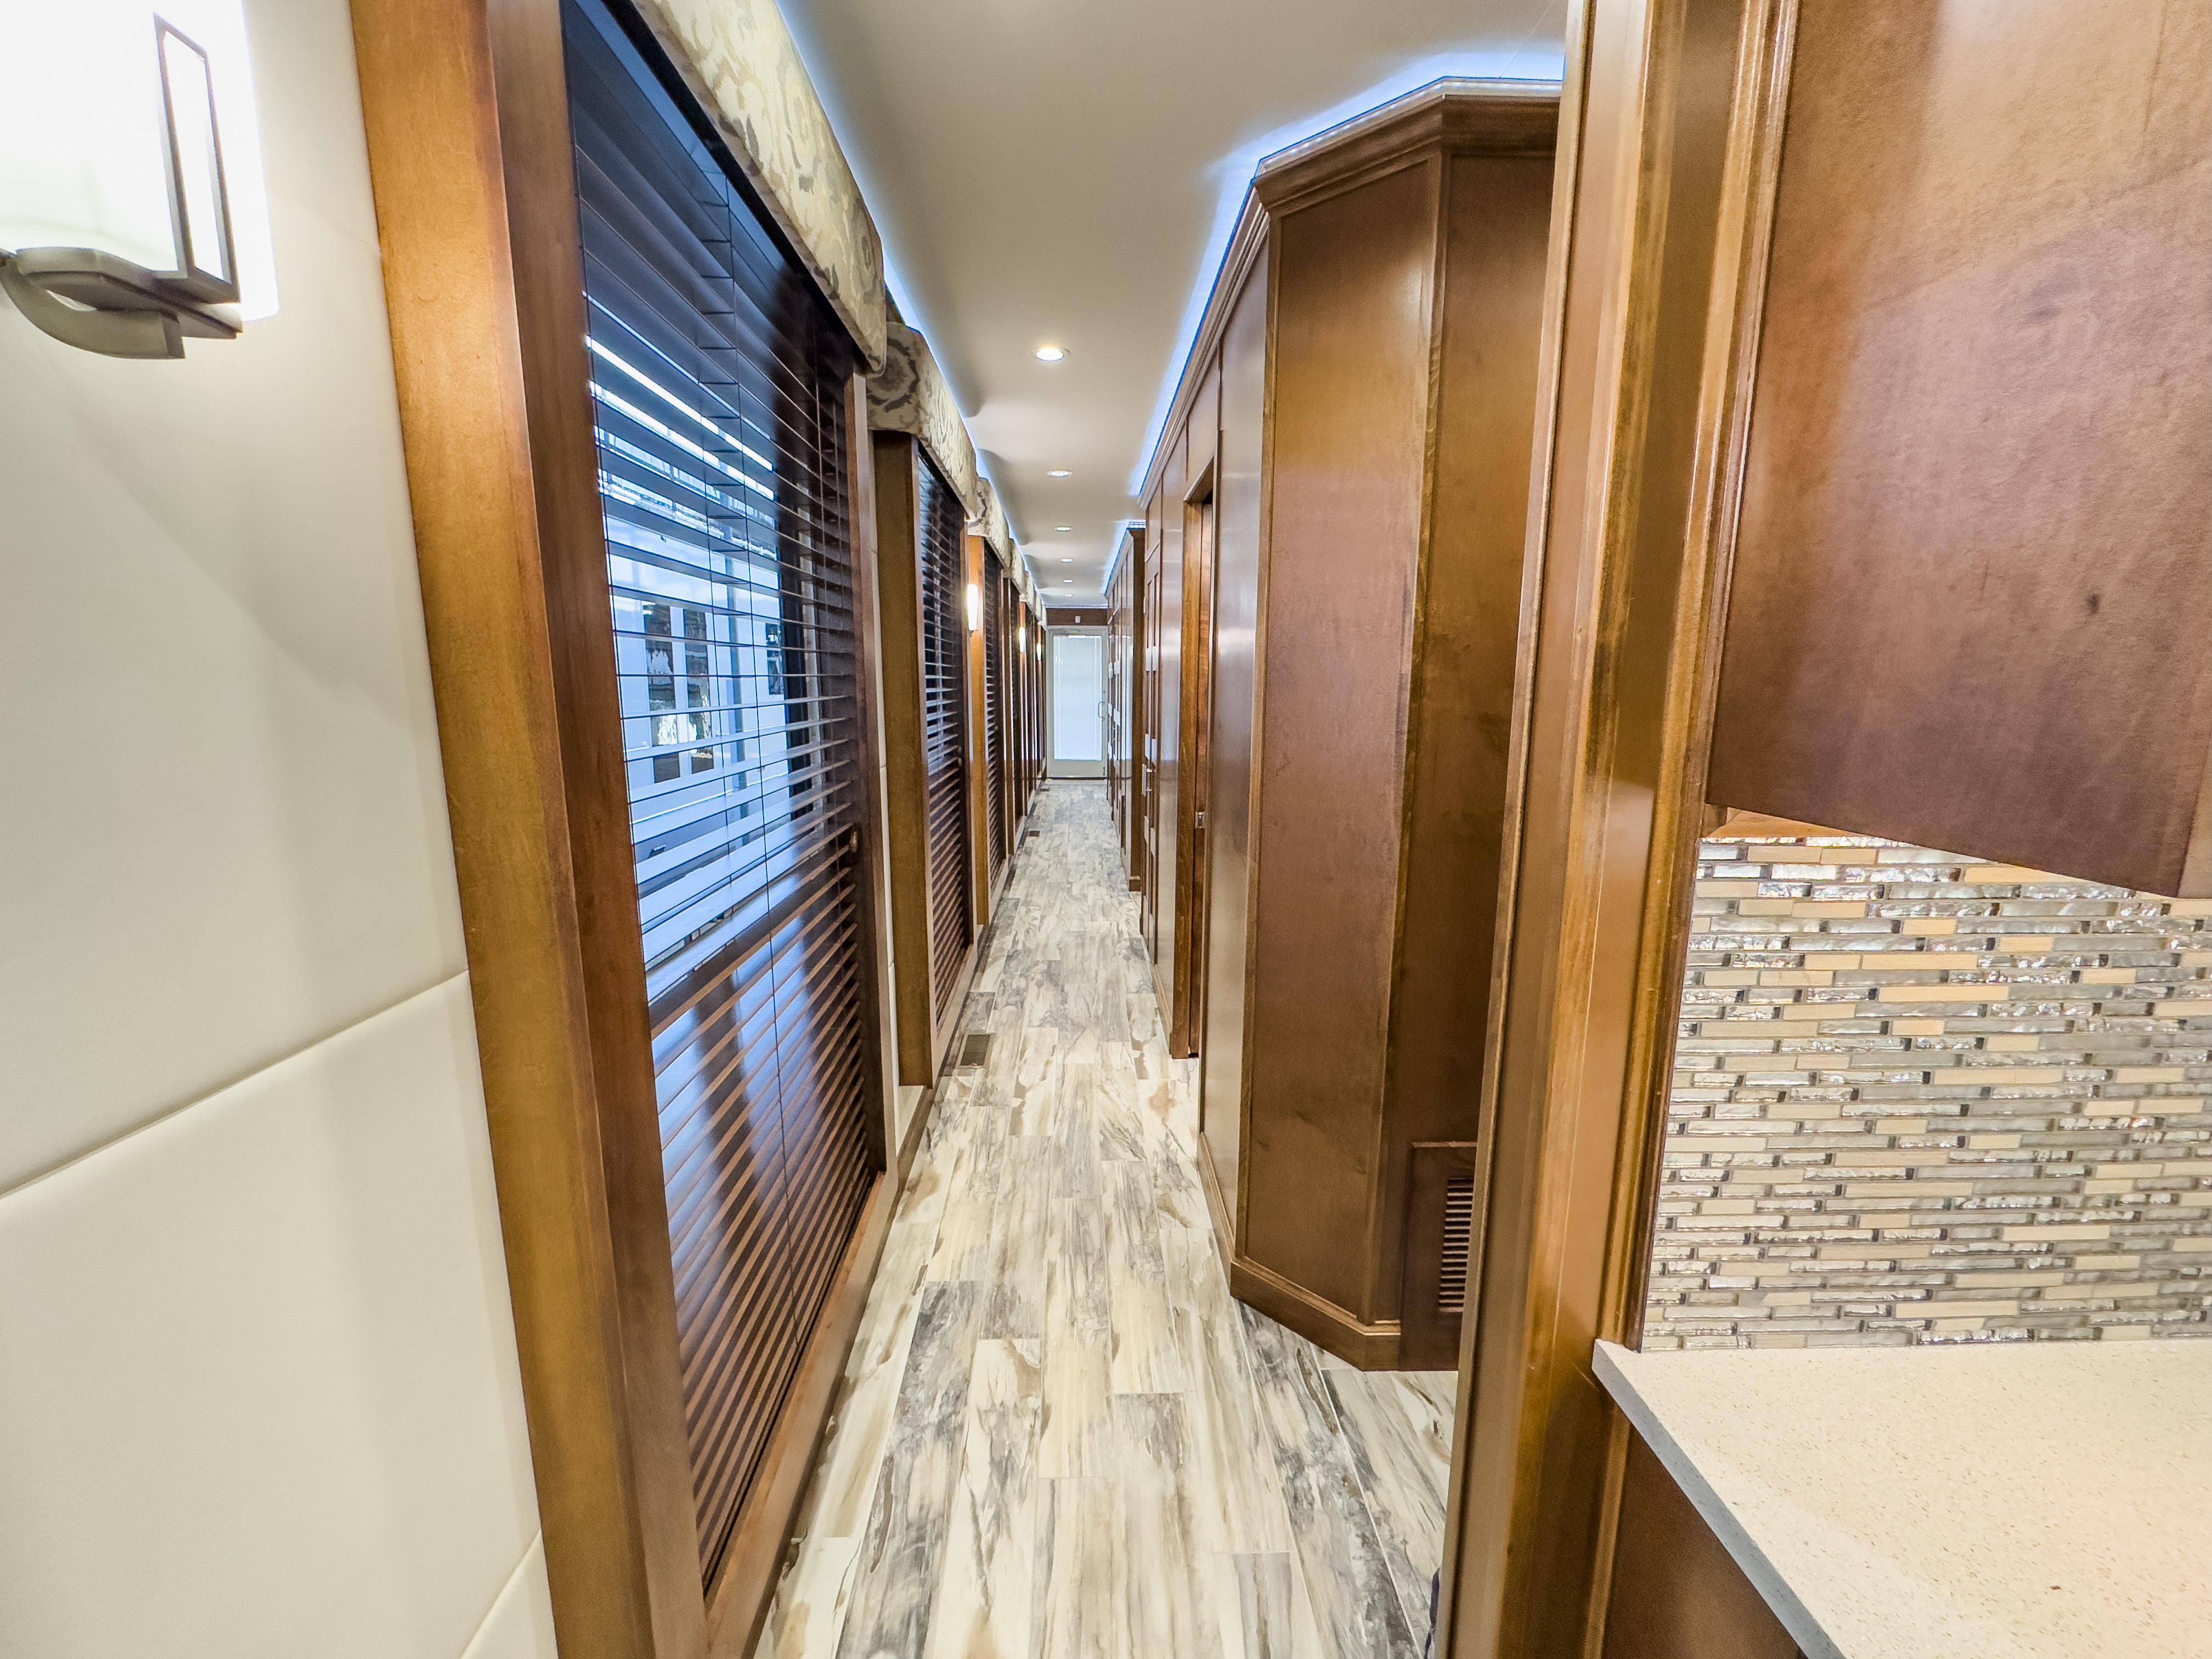 2016 Thoroughbred Houseboat